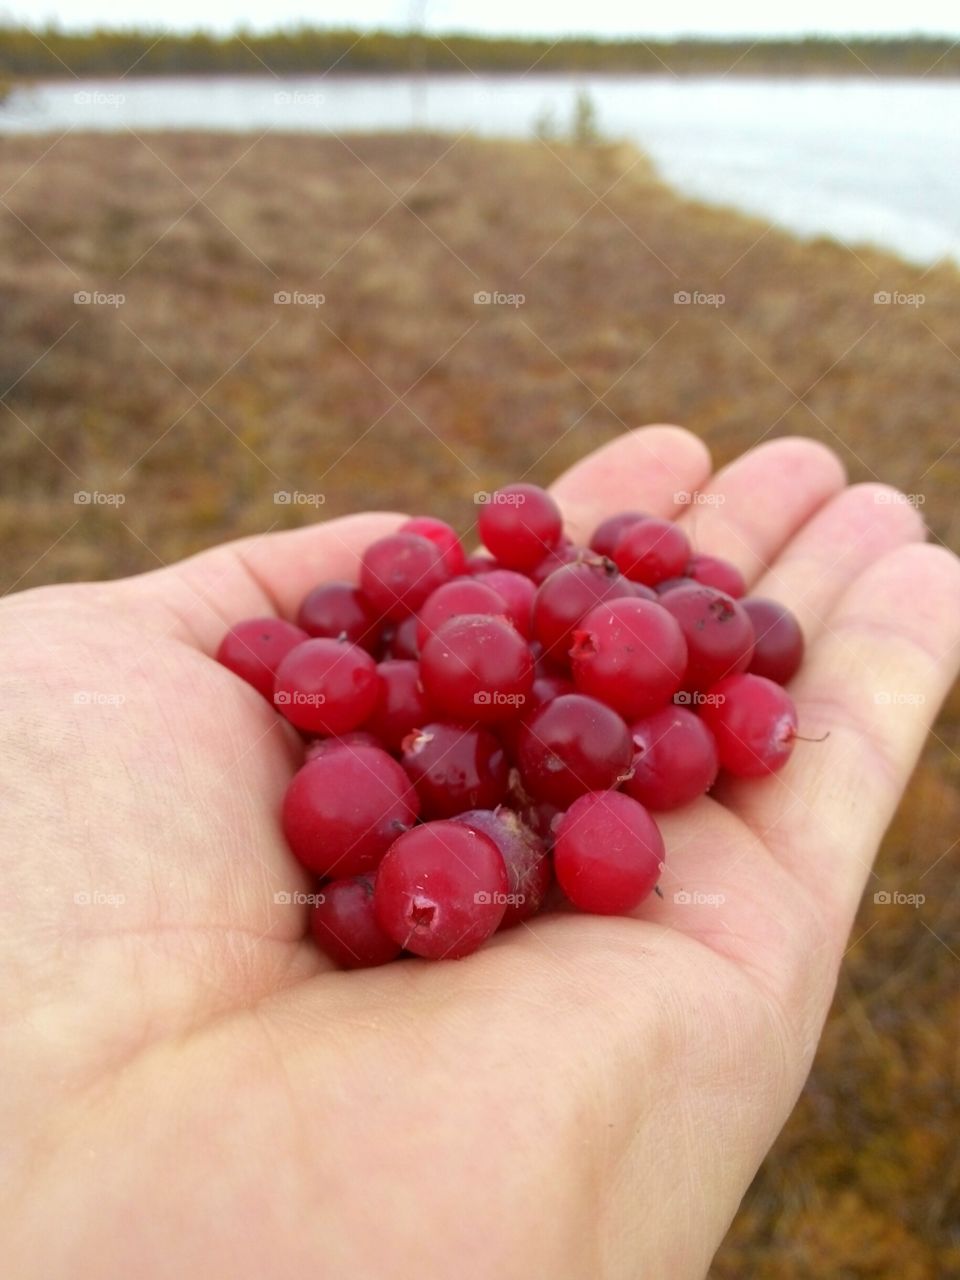 Cranberries in my hand